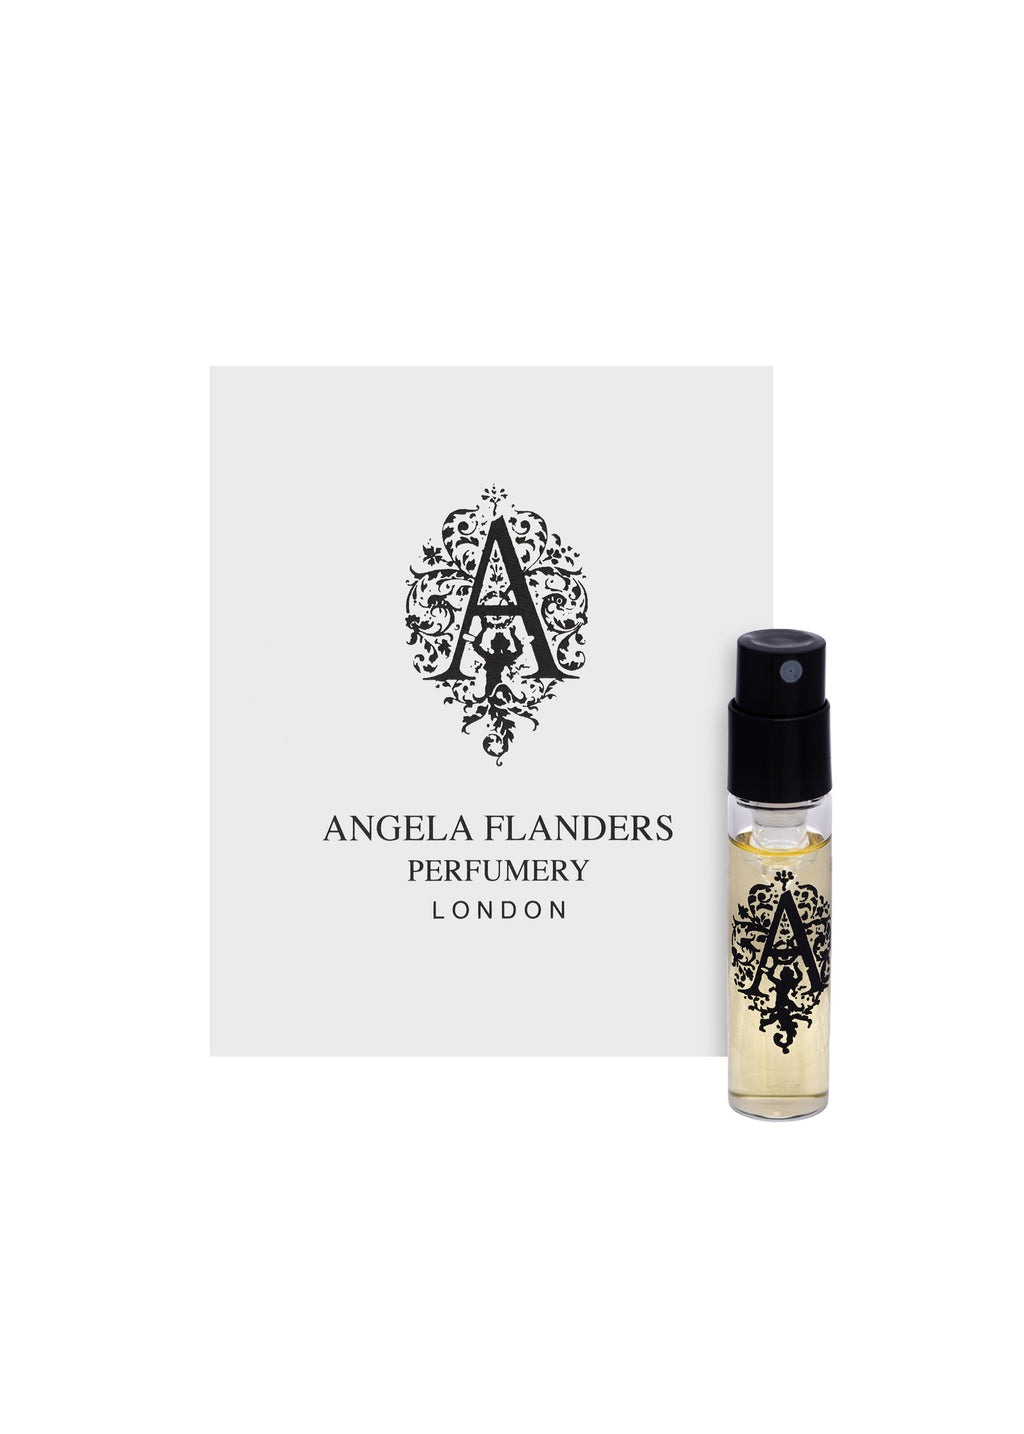 Angela Flanders Lily of the Valley Eau de Parfum Sample